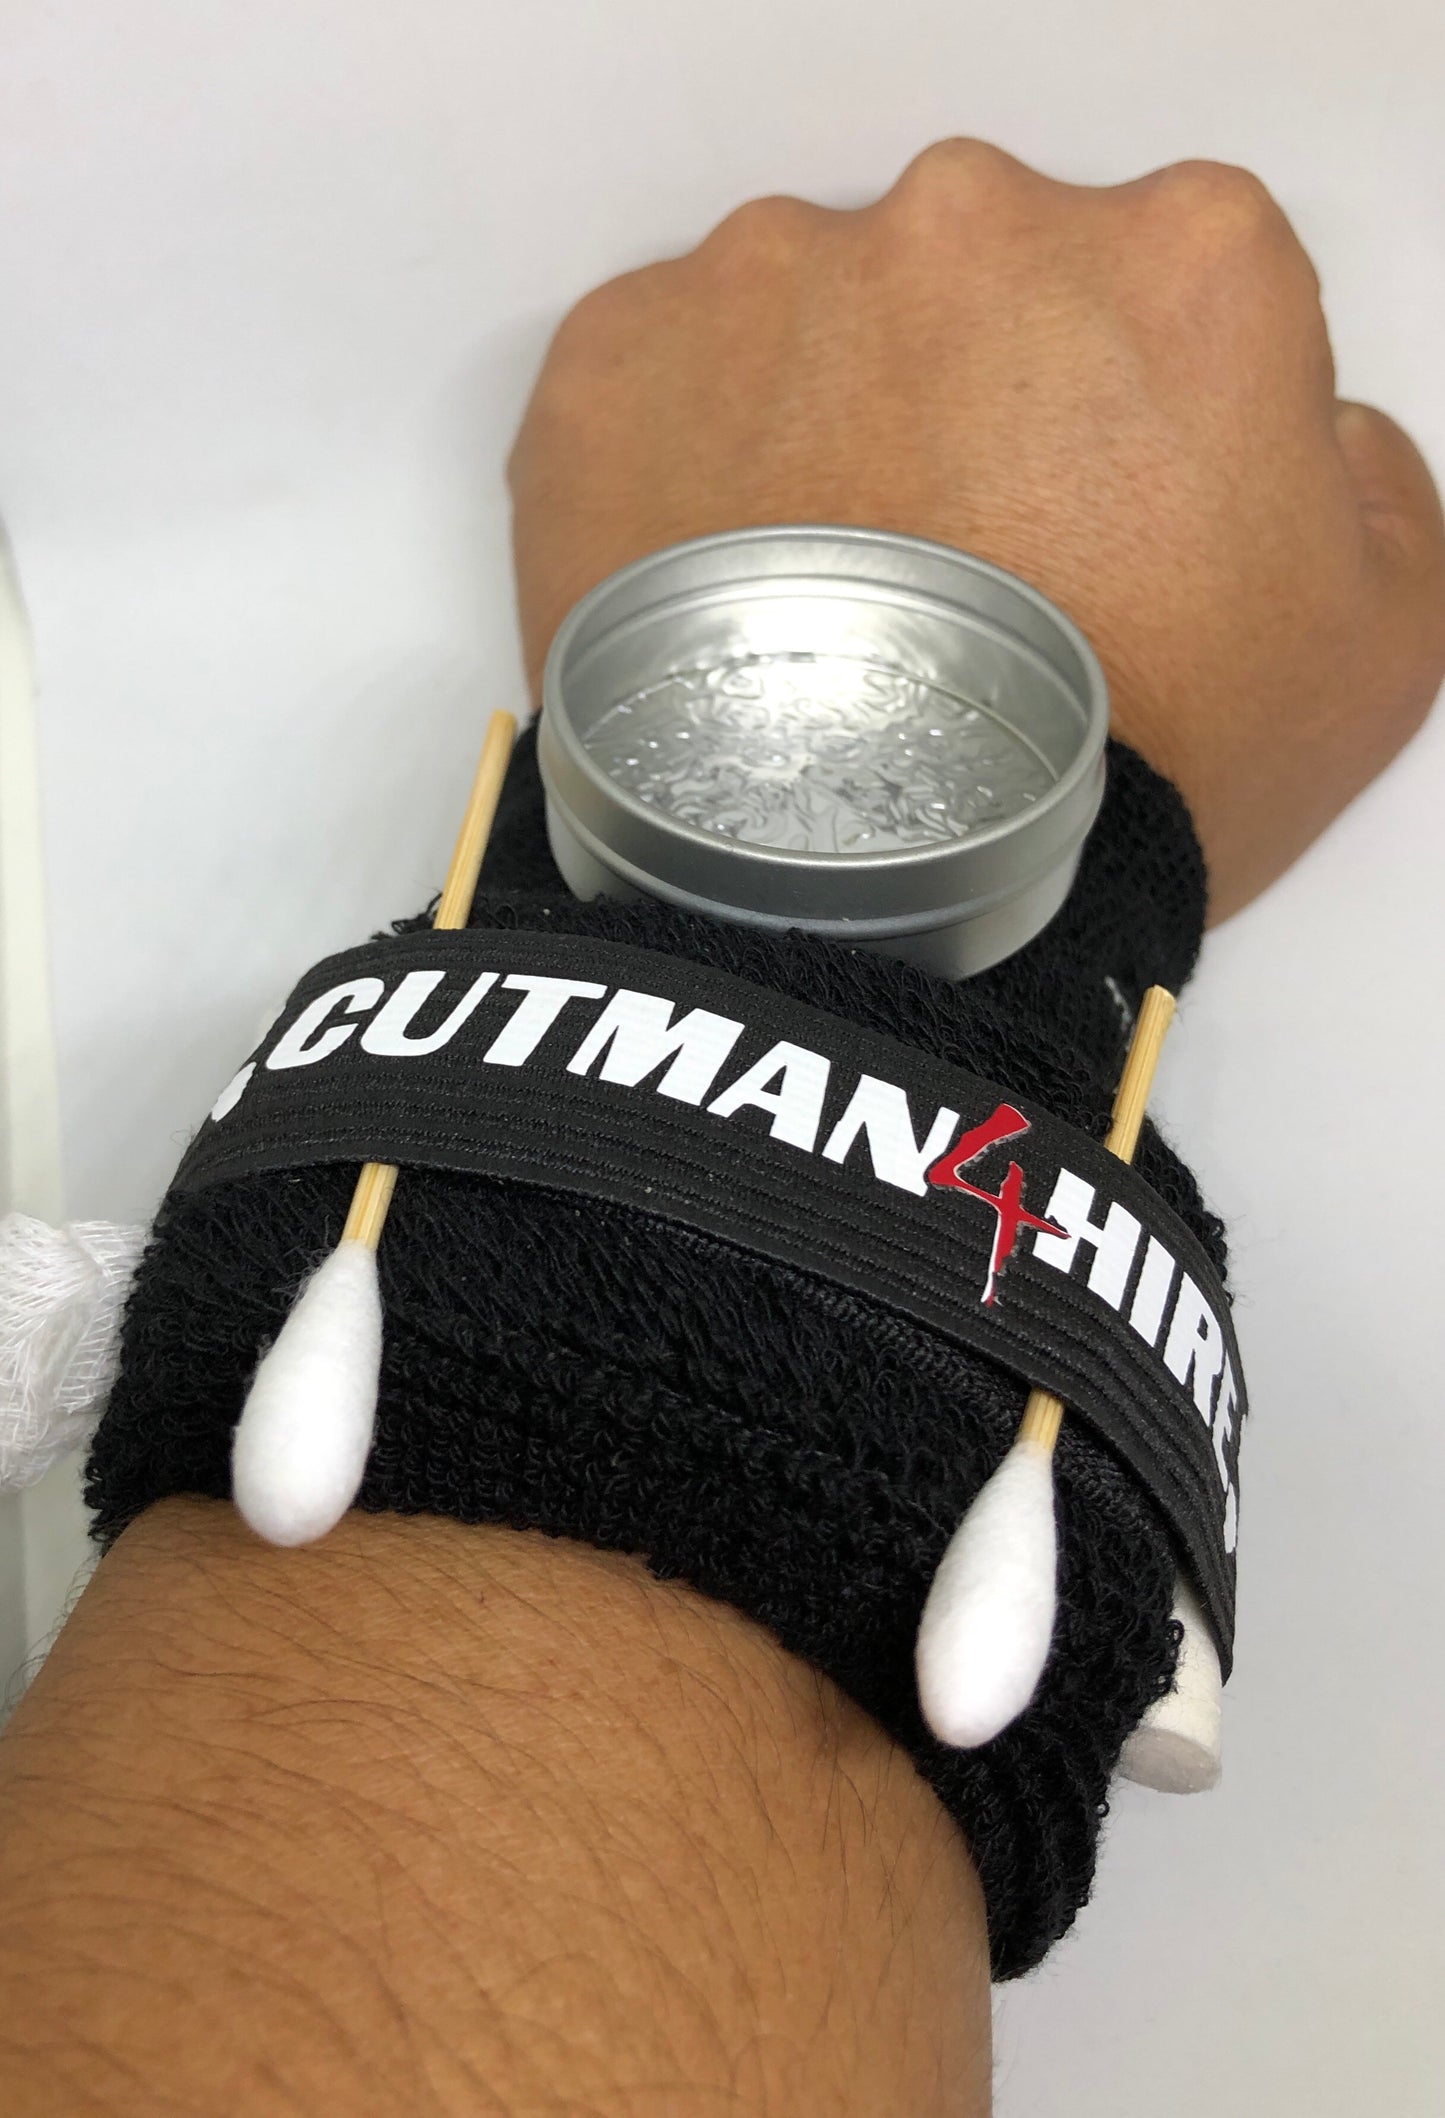 Cutman4hire Utility Wristband OG MX